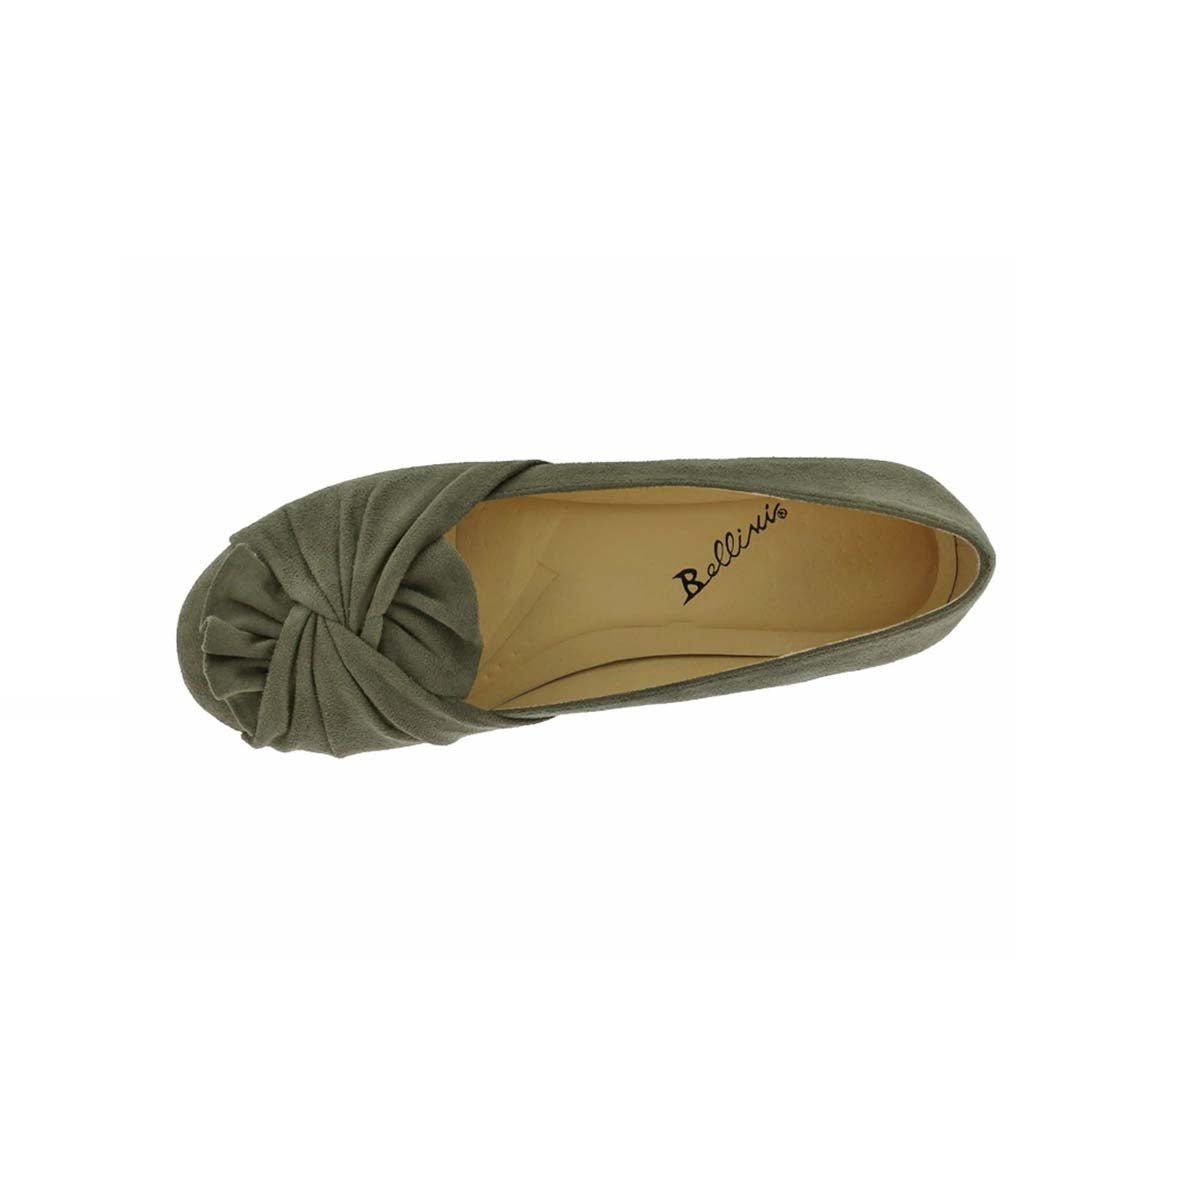 BELLINI SNUG WOMEN SLIP-ON SHOE'S IN OLIVE MICROSUEDE - TLW Shoes